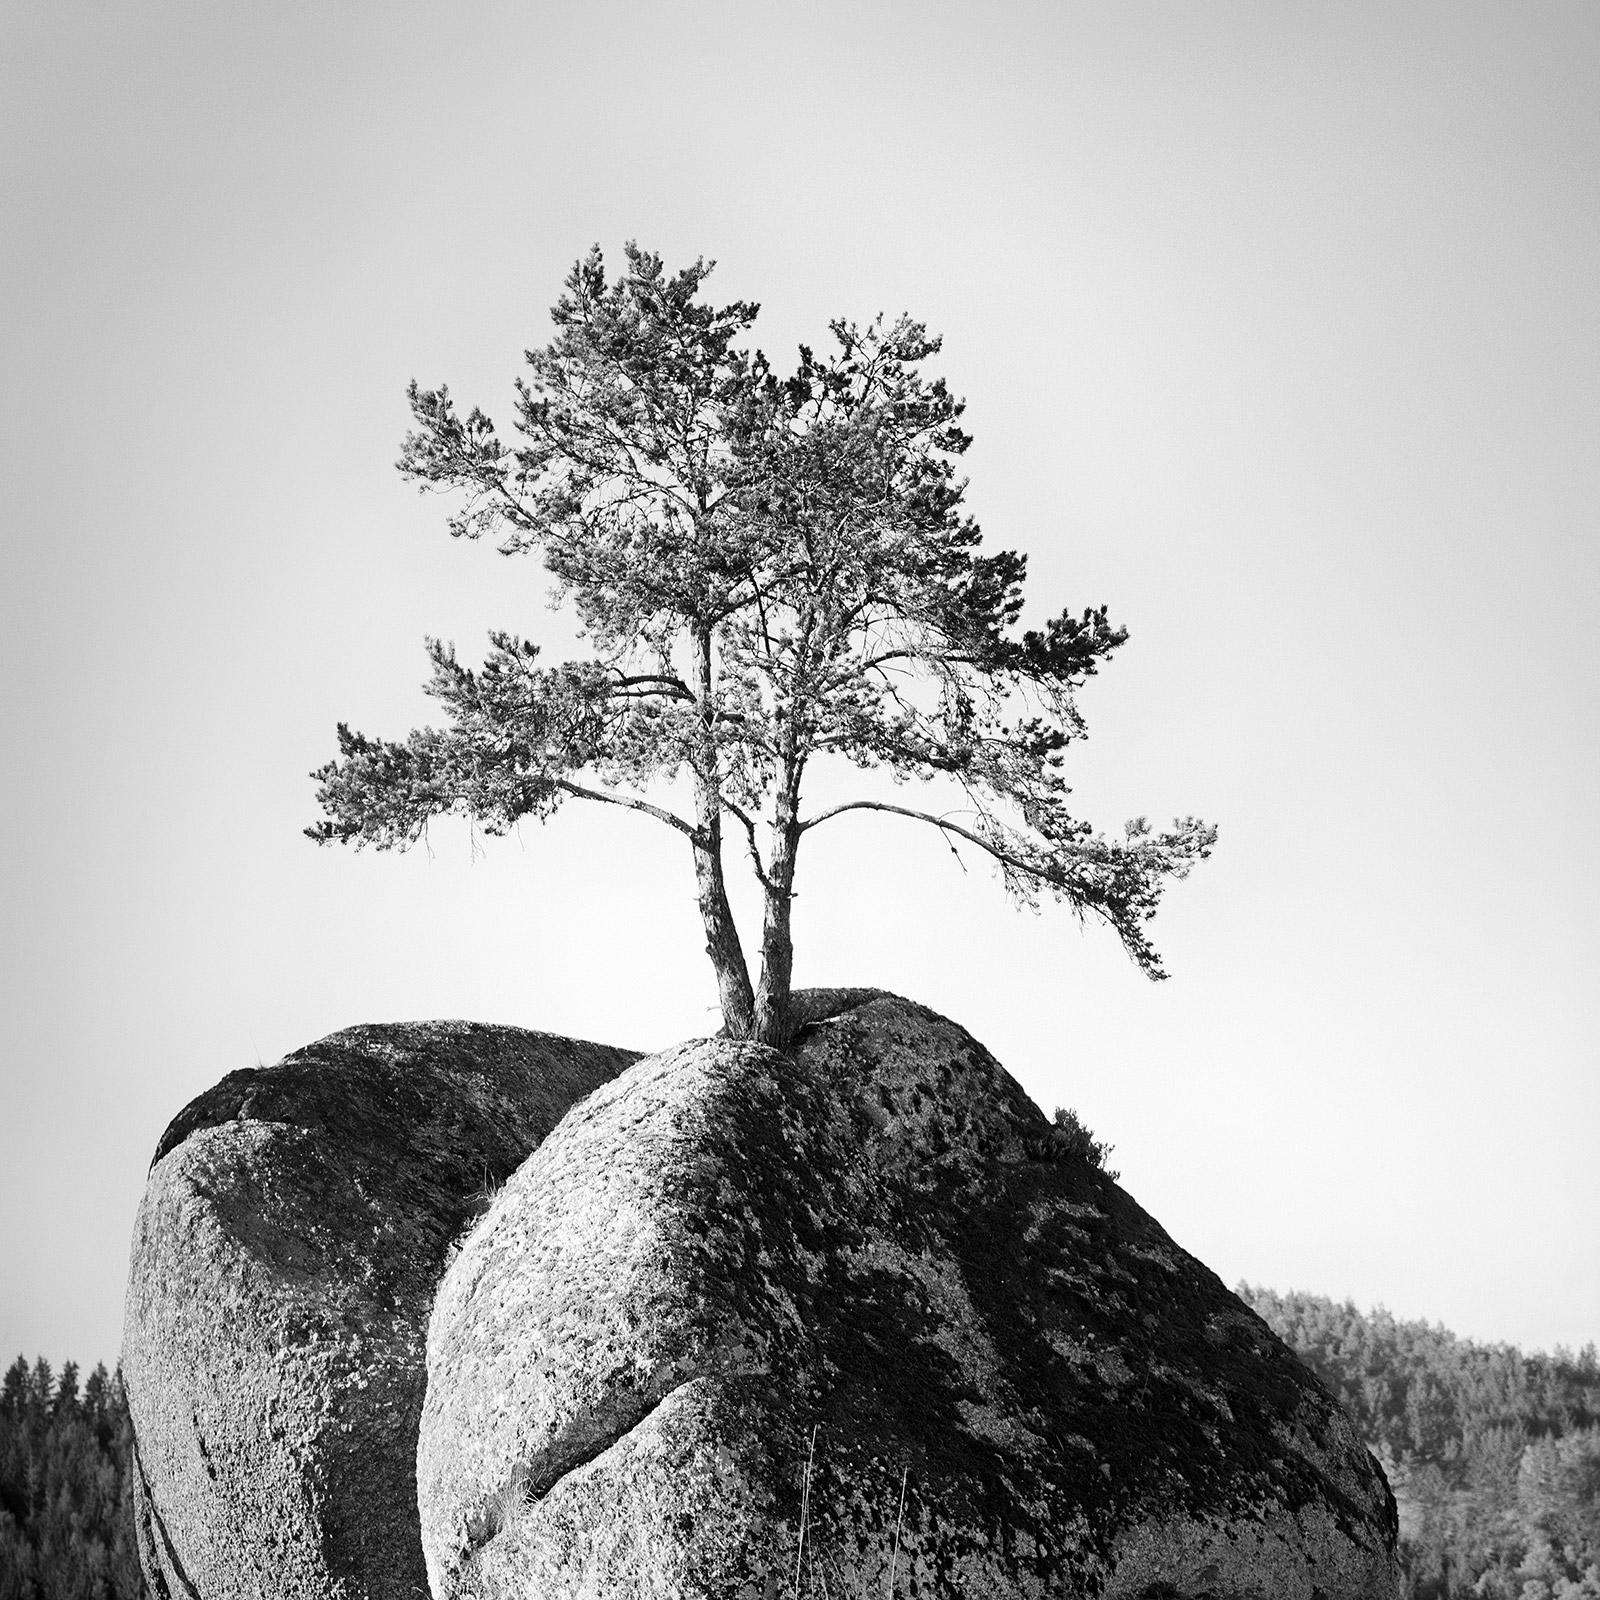 Gerald Berghammer Landscape Photograph - Tree on the Rock Austria minimalist black white landscape fine art photography